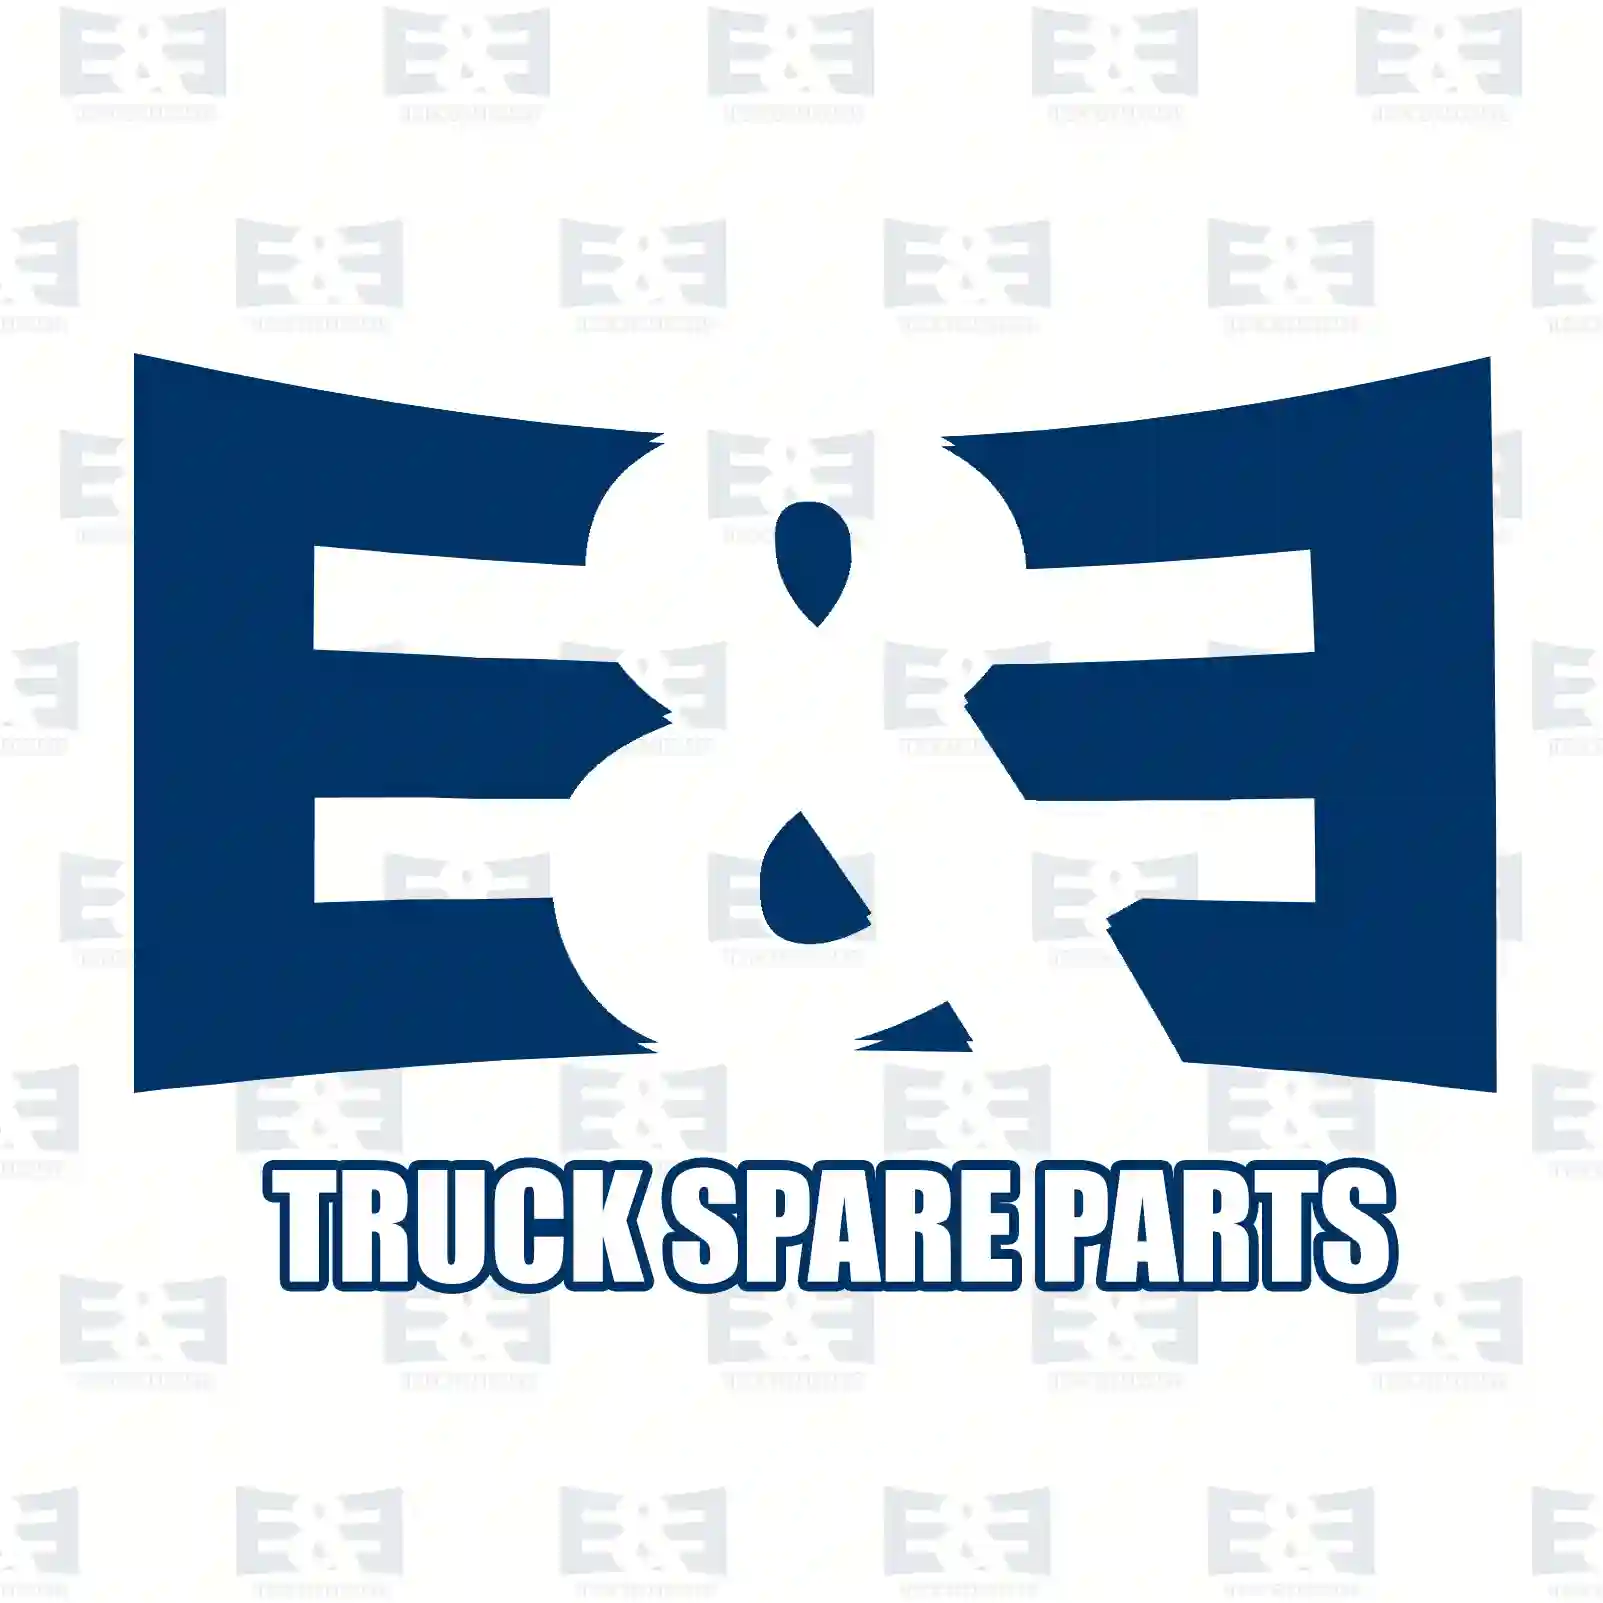 Drum brake lining kit, axle kit - oversize, 2E2293005, 5001860048S1, 5001860049, ||  2E2293005 E&E Truck Spare Parts | Truck Spare Parts, Auotomotive Spare Parts Drum brake lining kit, axle kit - oversize, 2E2293005, 5001860048S1, 5001860049, ||  2E2293005 E&E Truck Spare Parts | Truck Spare Parts, Auotomotive Spare Parts